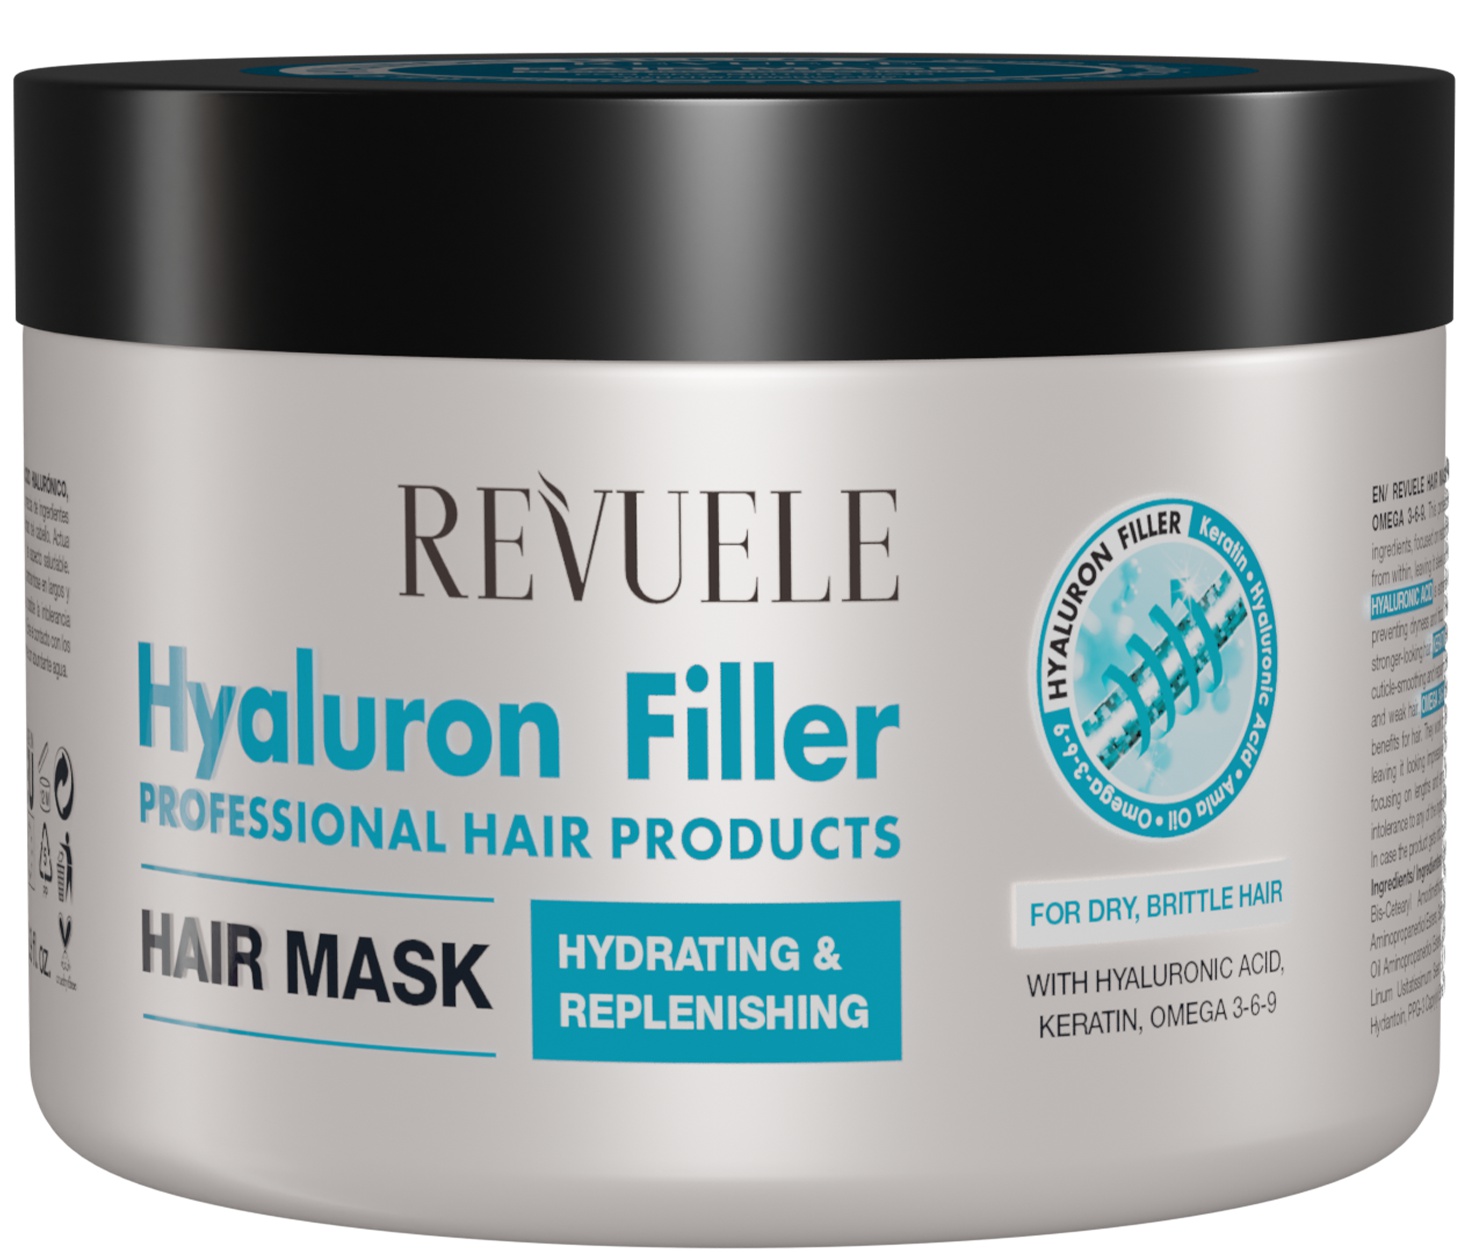 Revuele Hyaluron Filler Hair Mask